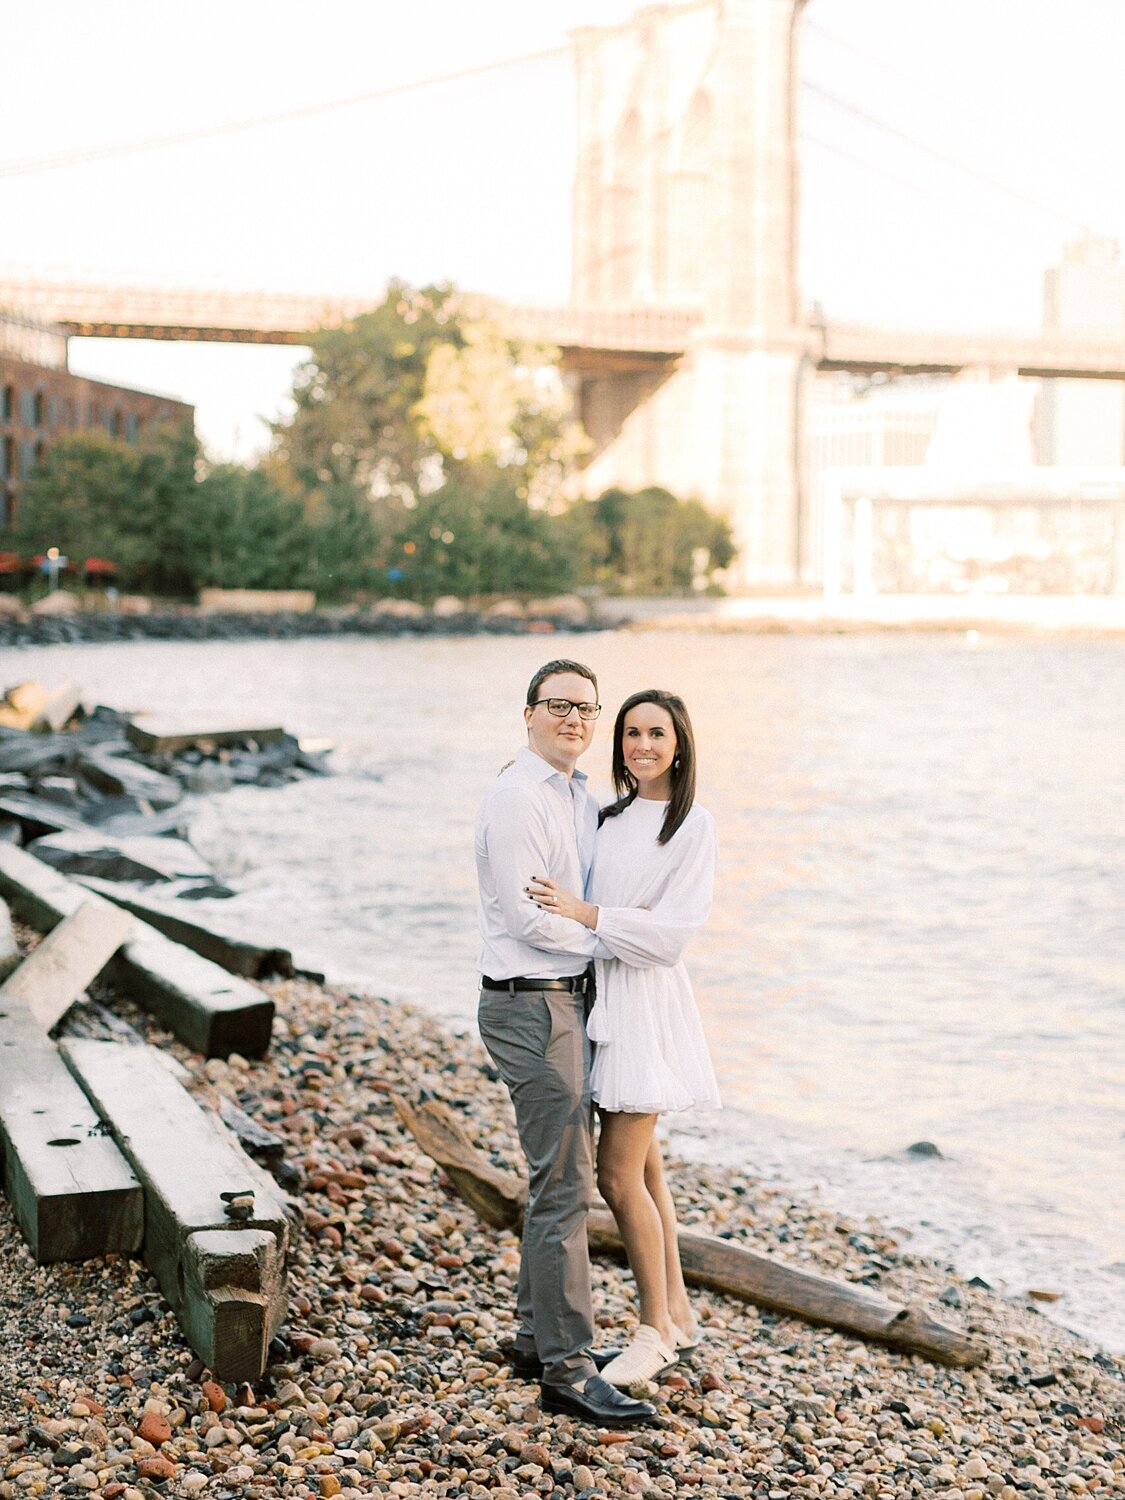 Brooklyn Bridge engagement photos by Asher Gardner Photography